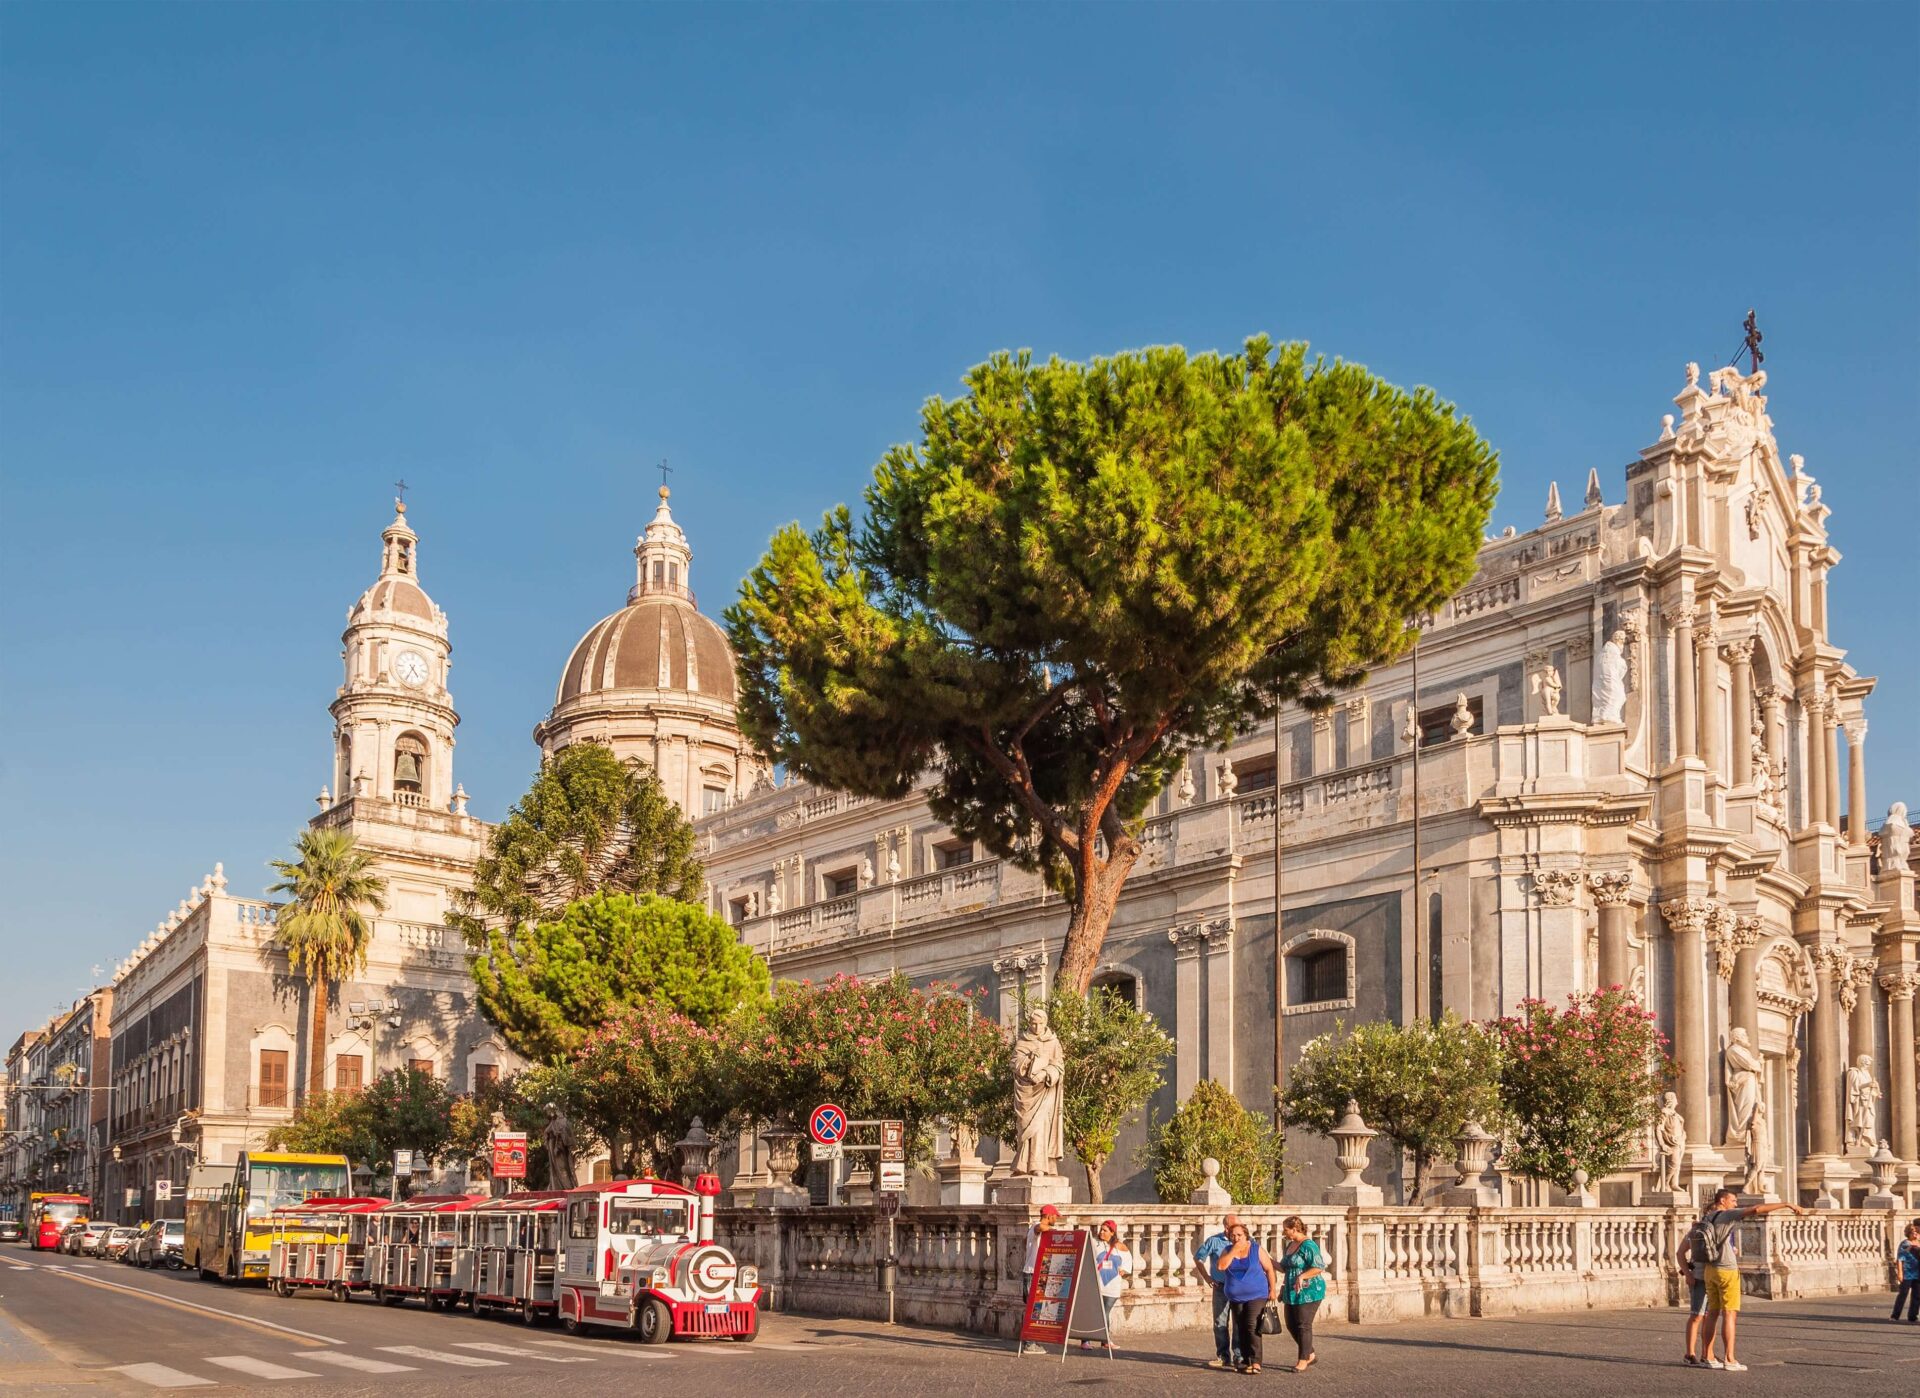 Piazza del Duomo com a Cathedral de Santa Agatha - Catania. Foto: Frog Dares / Bigstock